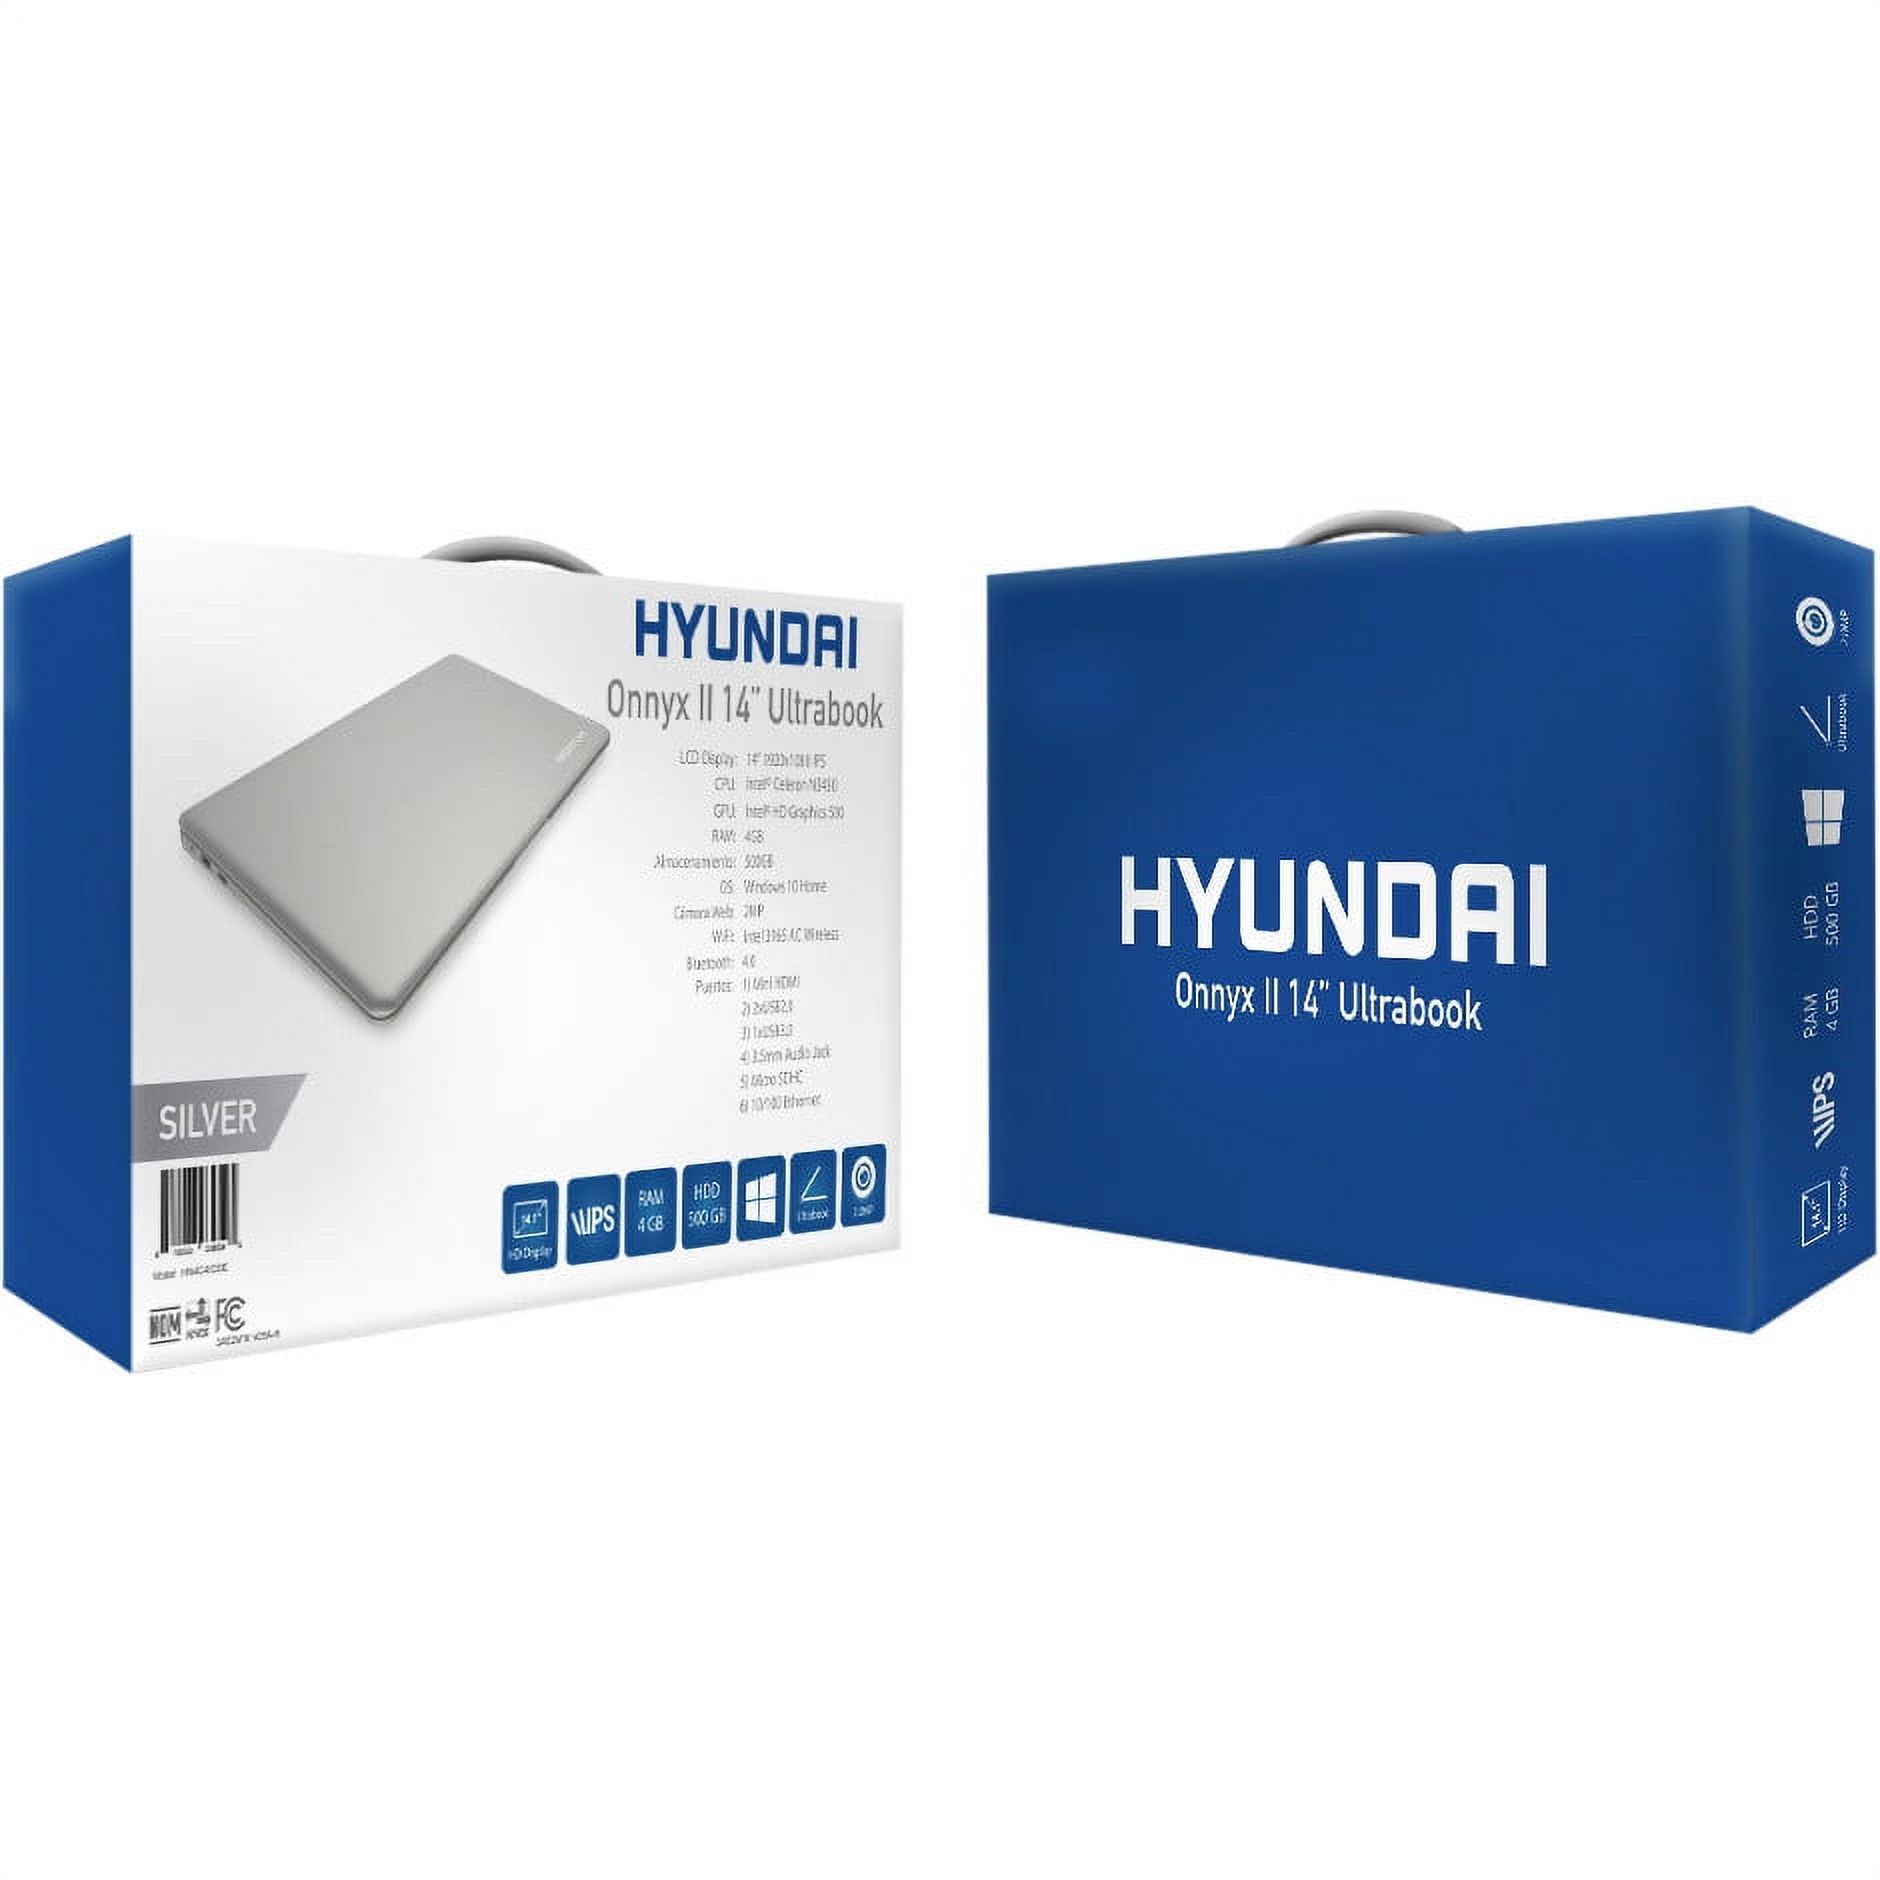 Hyundai Thinnote 14.1” Intel Pentium Ultrabook with Metallic Case - image 2 of 5